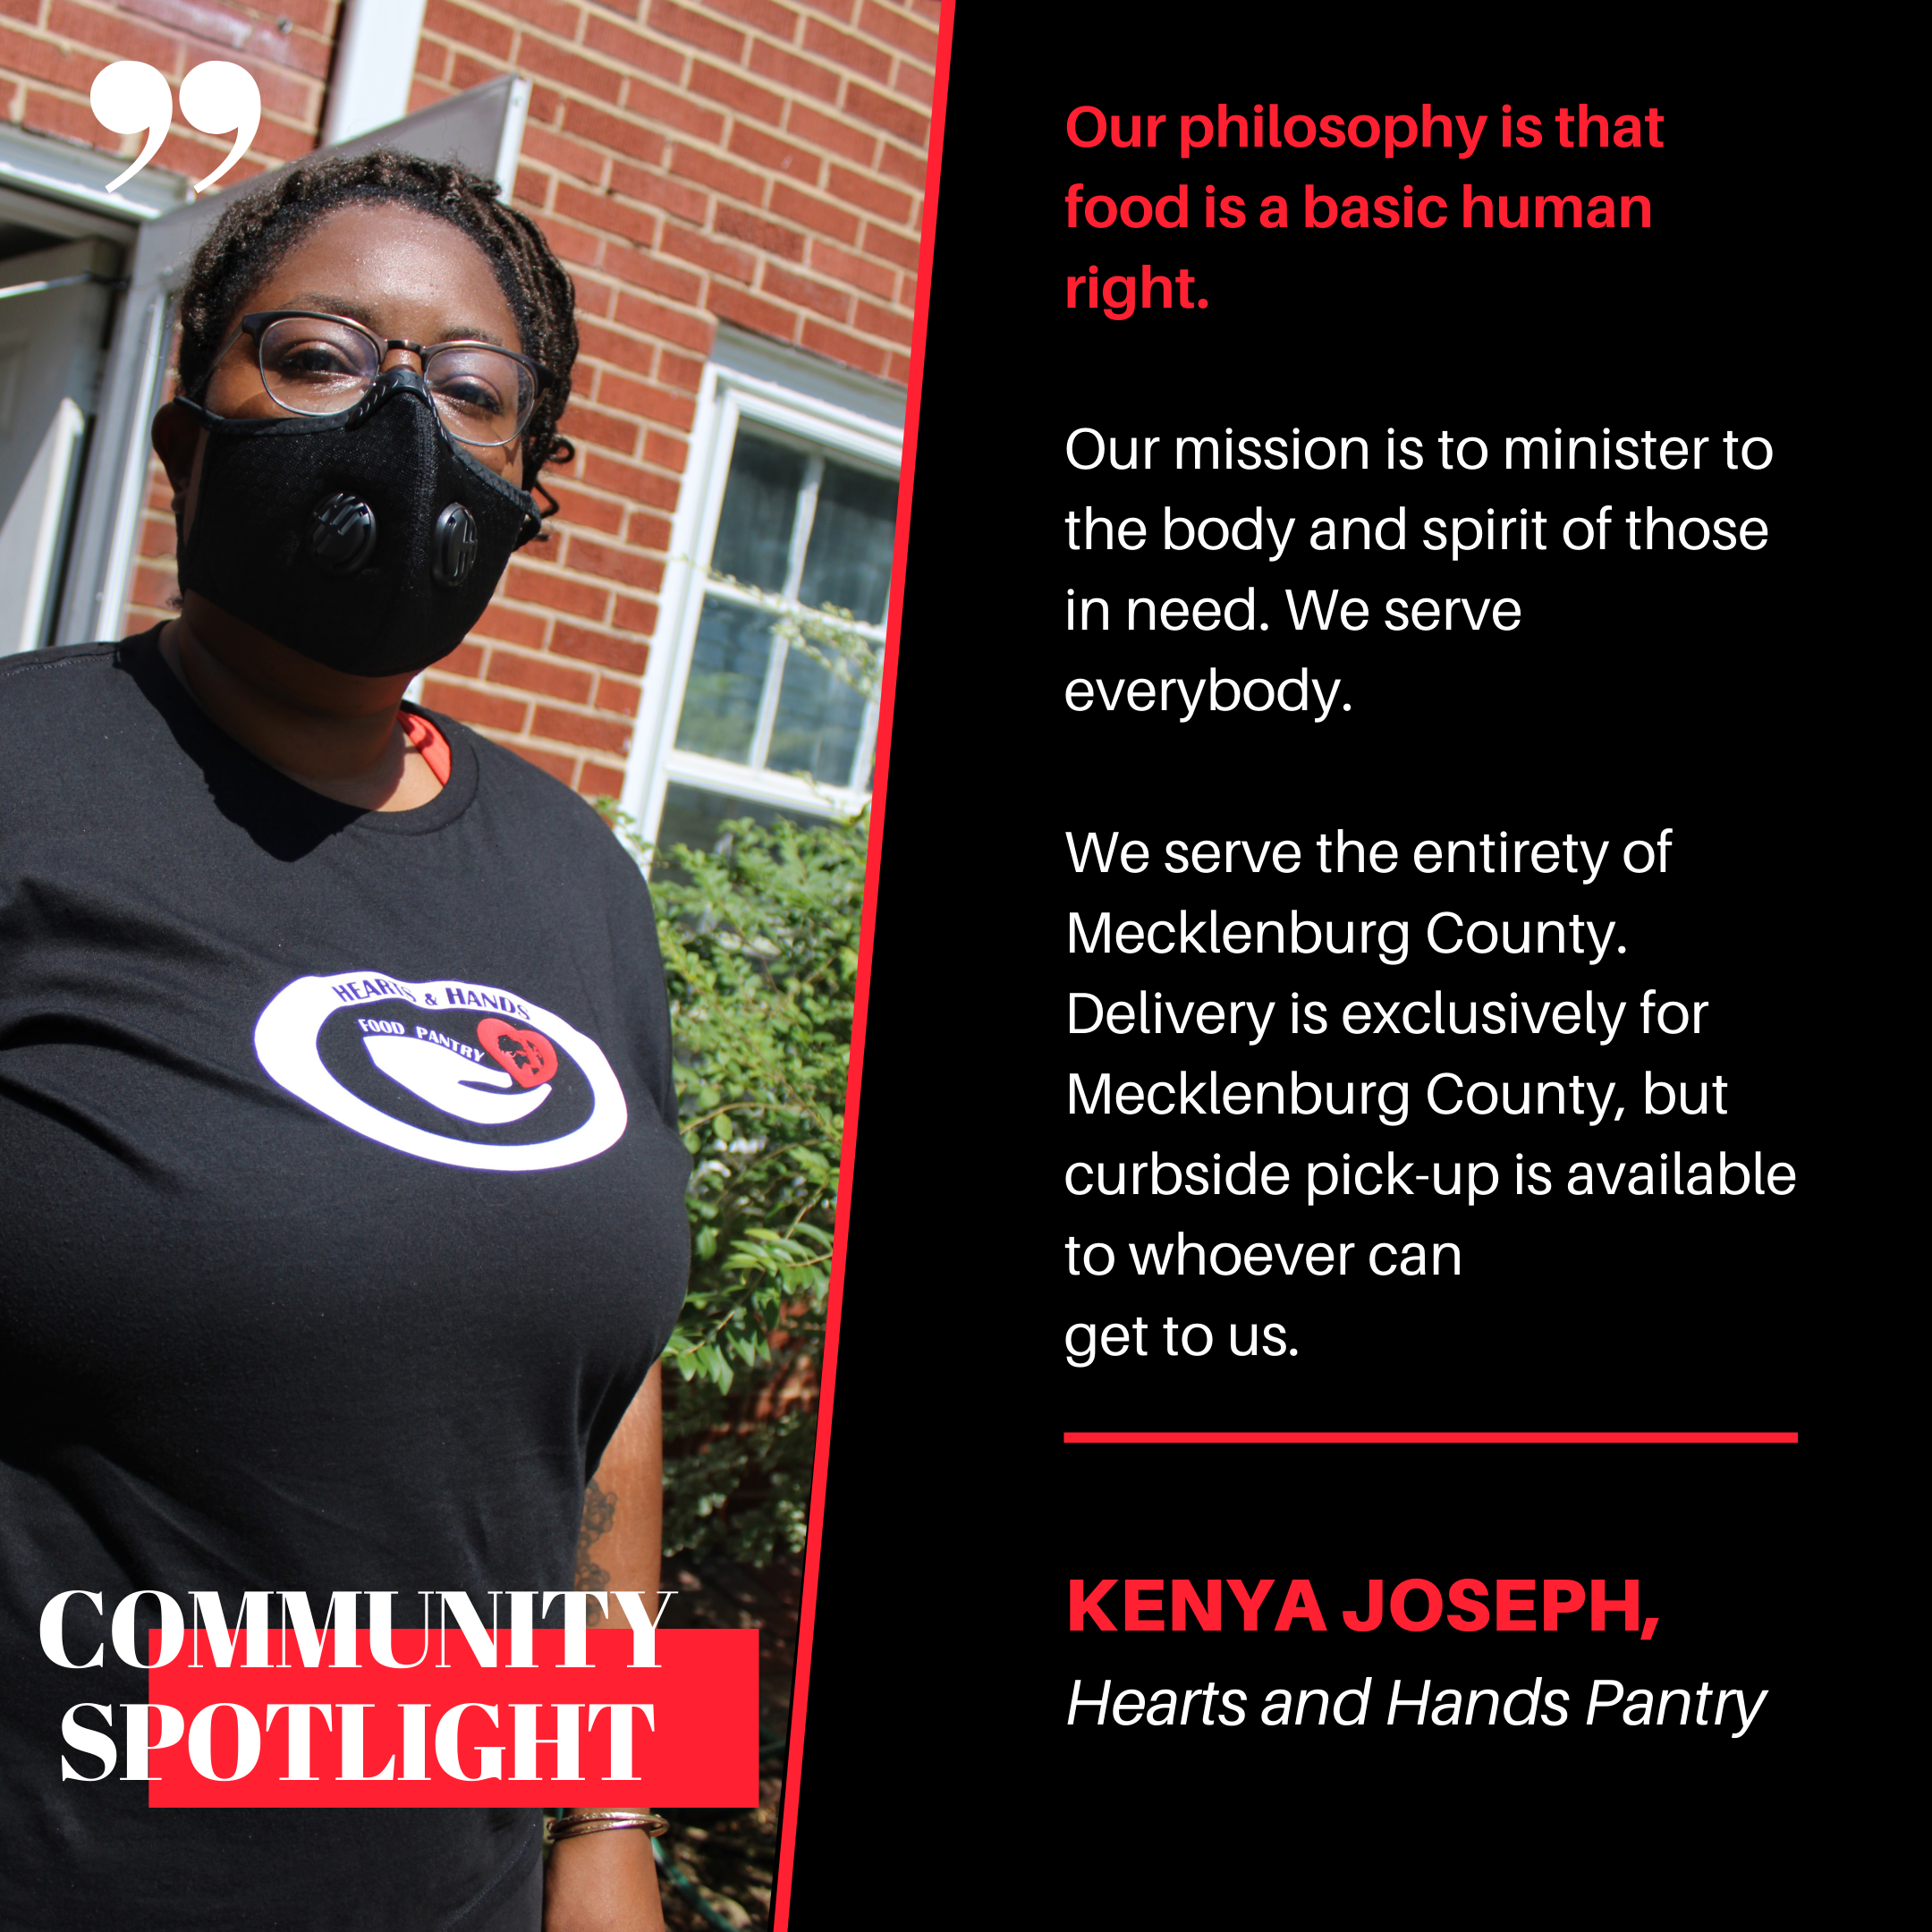 Photo and quote of Kenya Joseph